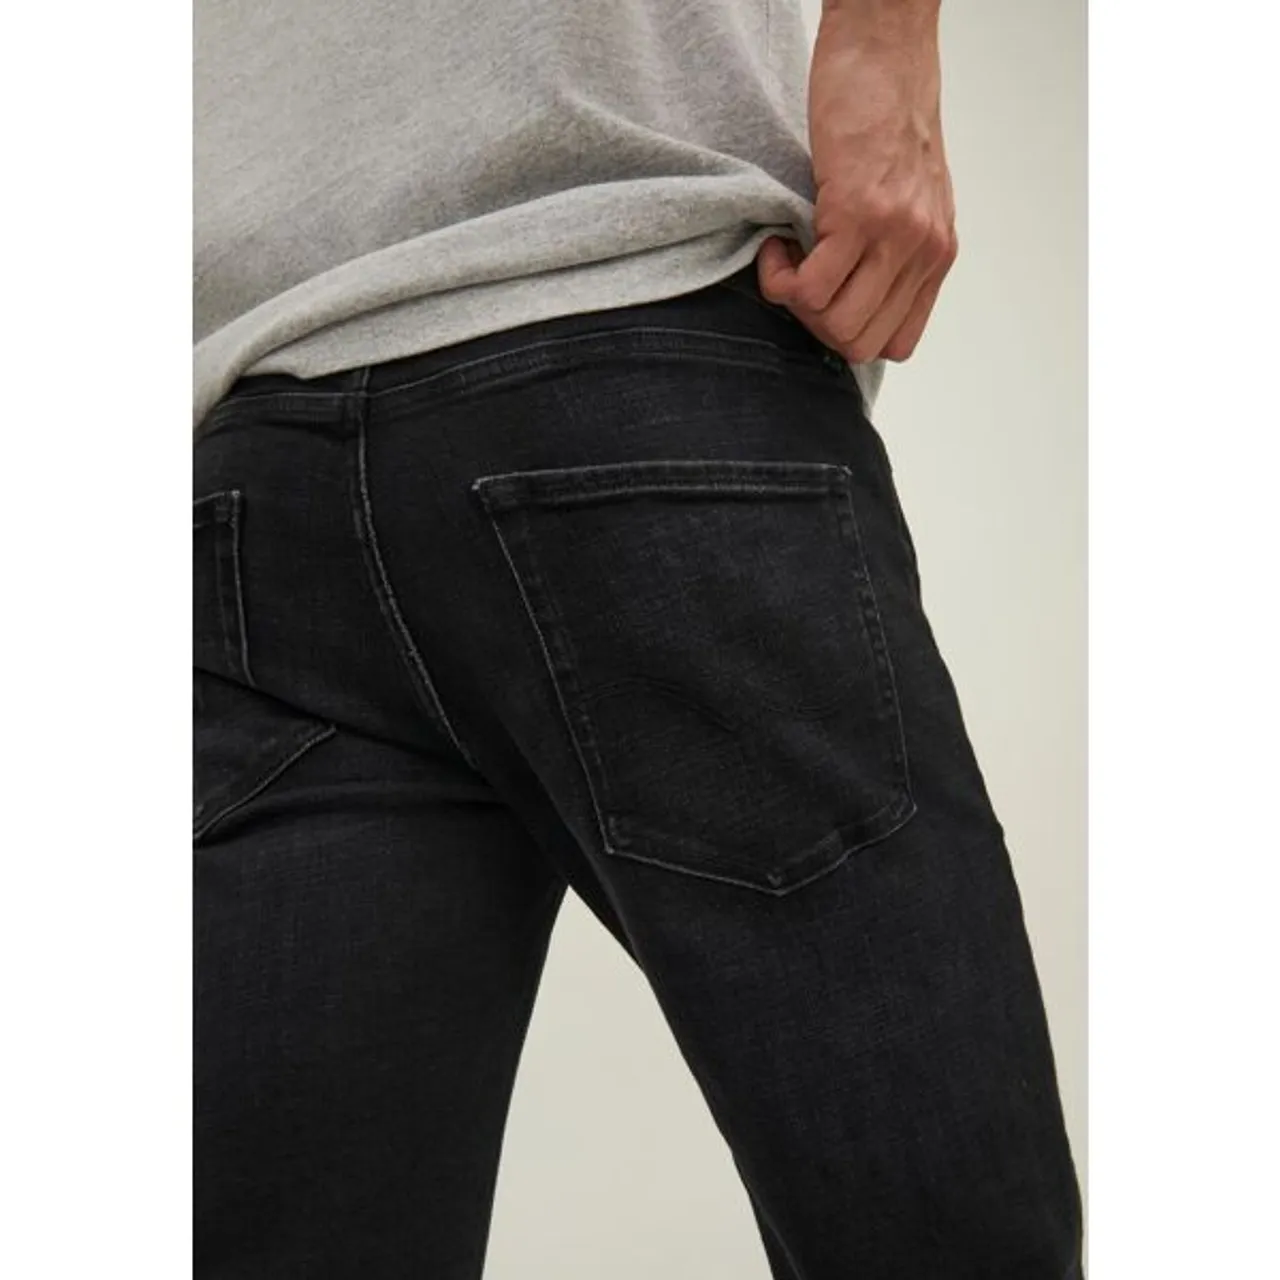 Comfort-fit-Jeans JACK & JONES "MIKE ORIGINAL" Gr. 29, Länge 30, schwarz (black denim) Herren Jeans 5-Pocket-Jeans